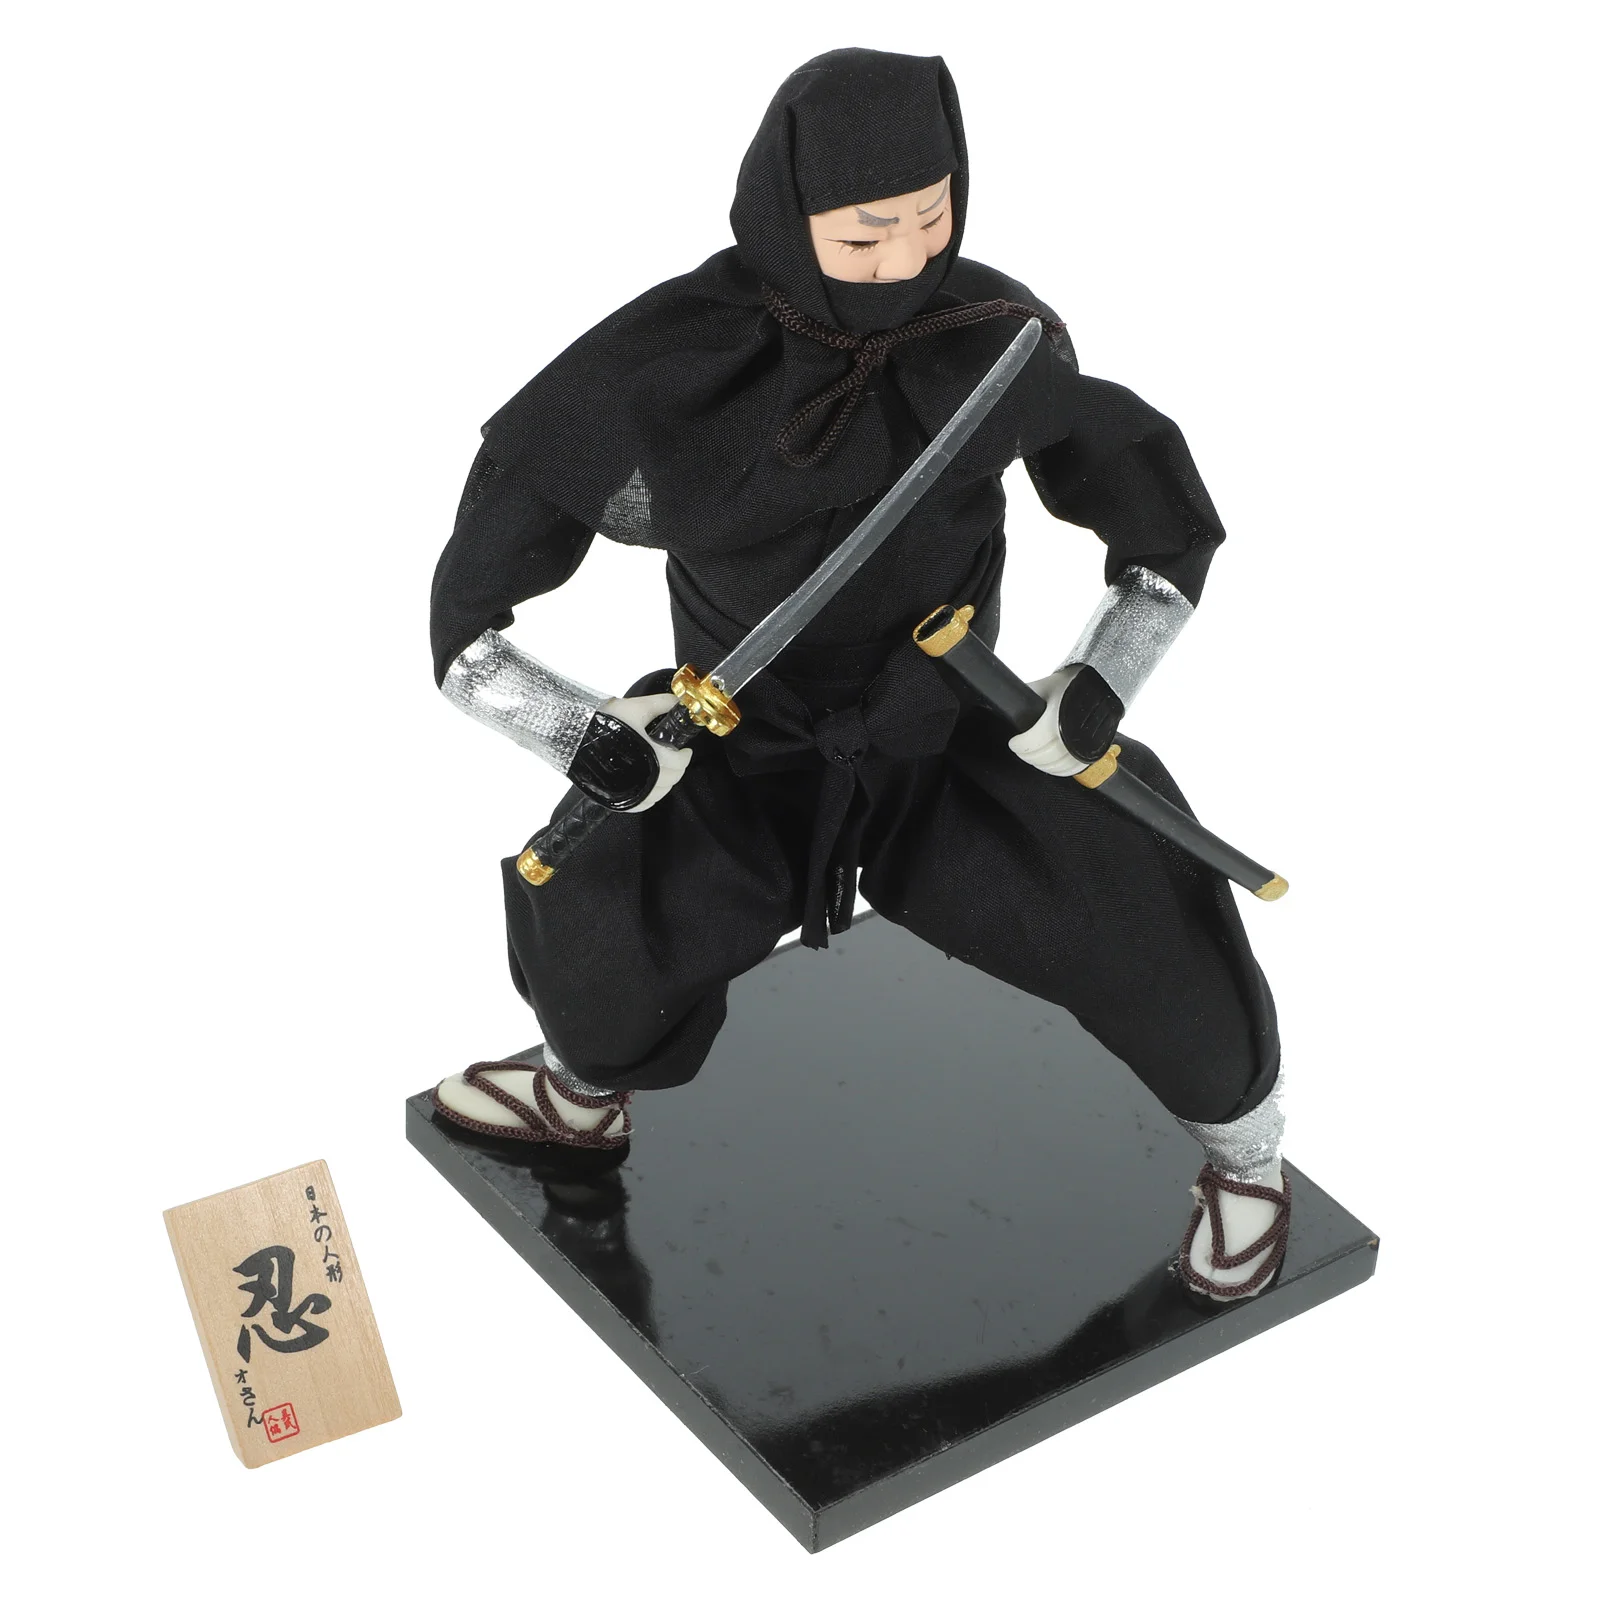 

Japanese Style Decor For Home Ninja Gadgets Decorate Table Centerpieces Desktop Ornament Dolls Plaster